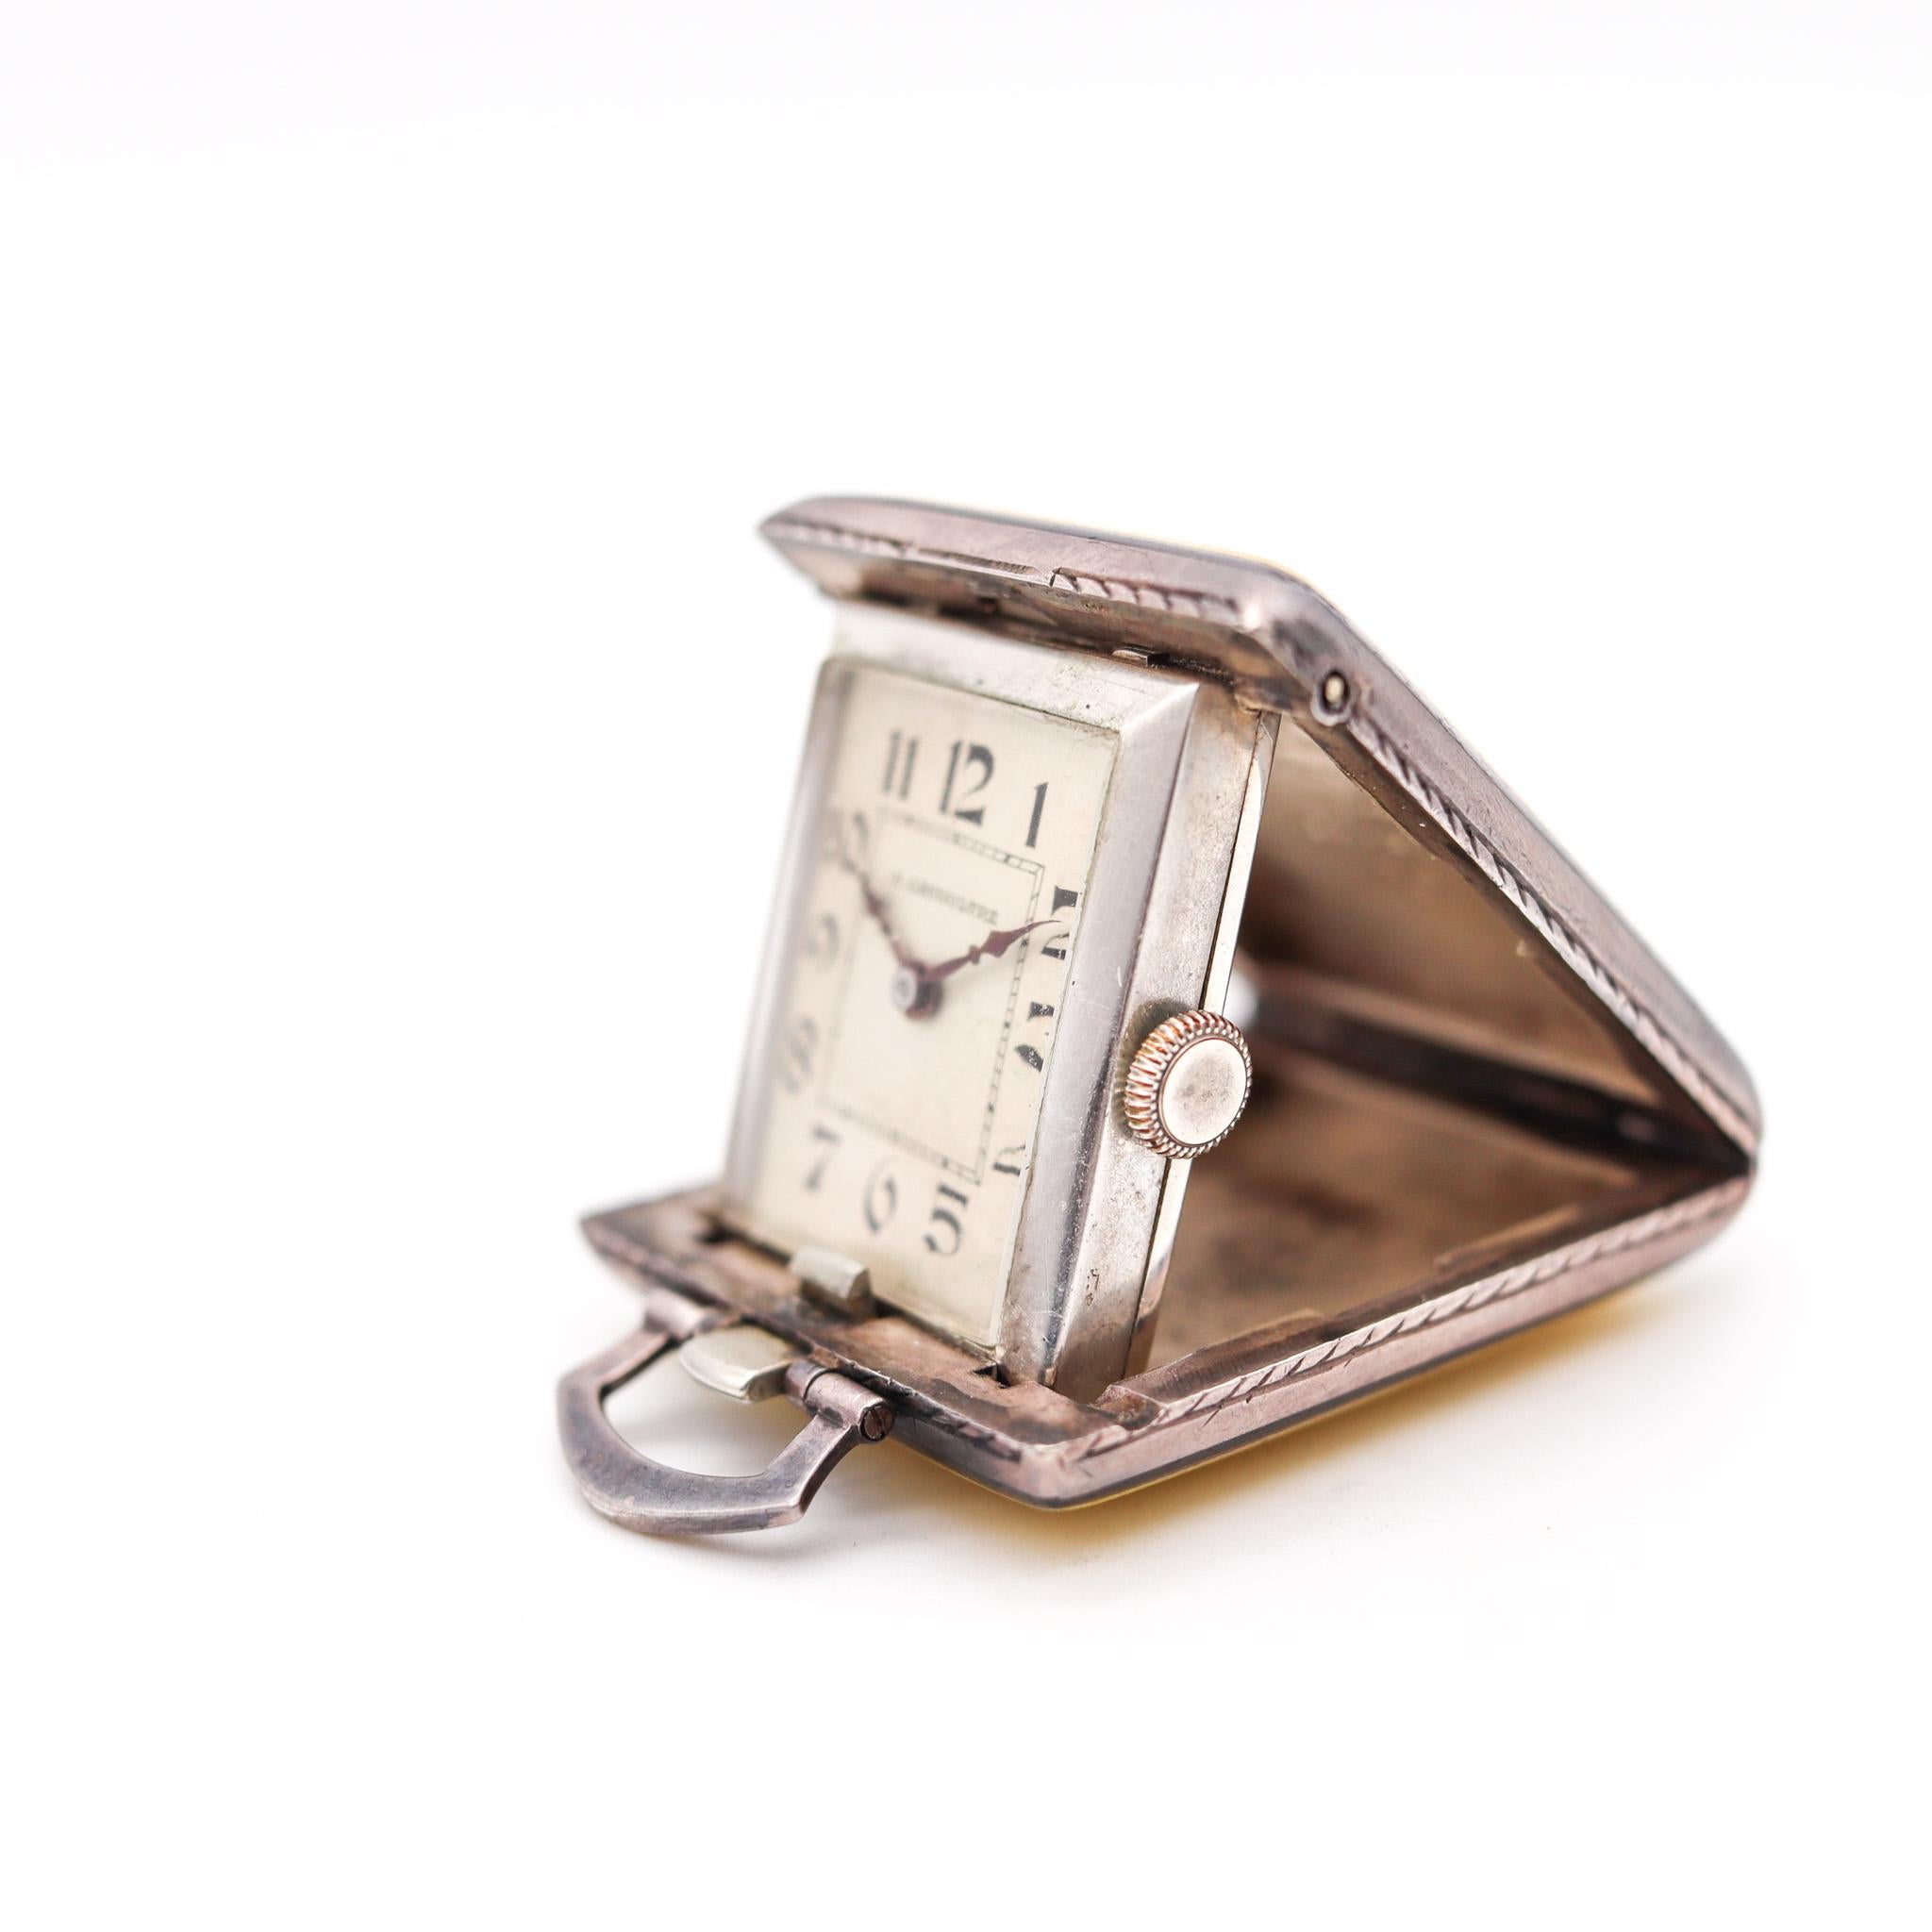 Enameled Lecoultre 1920 Travel Pendant Desk Clock Sterling Silver with Guilloche Enamel